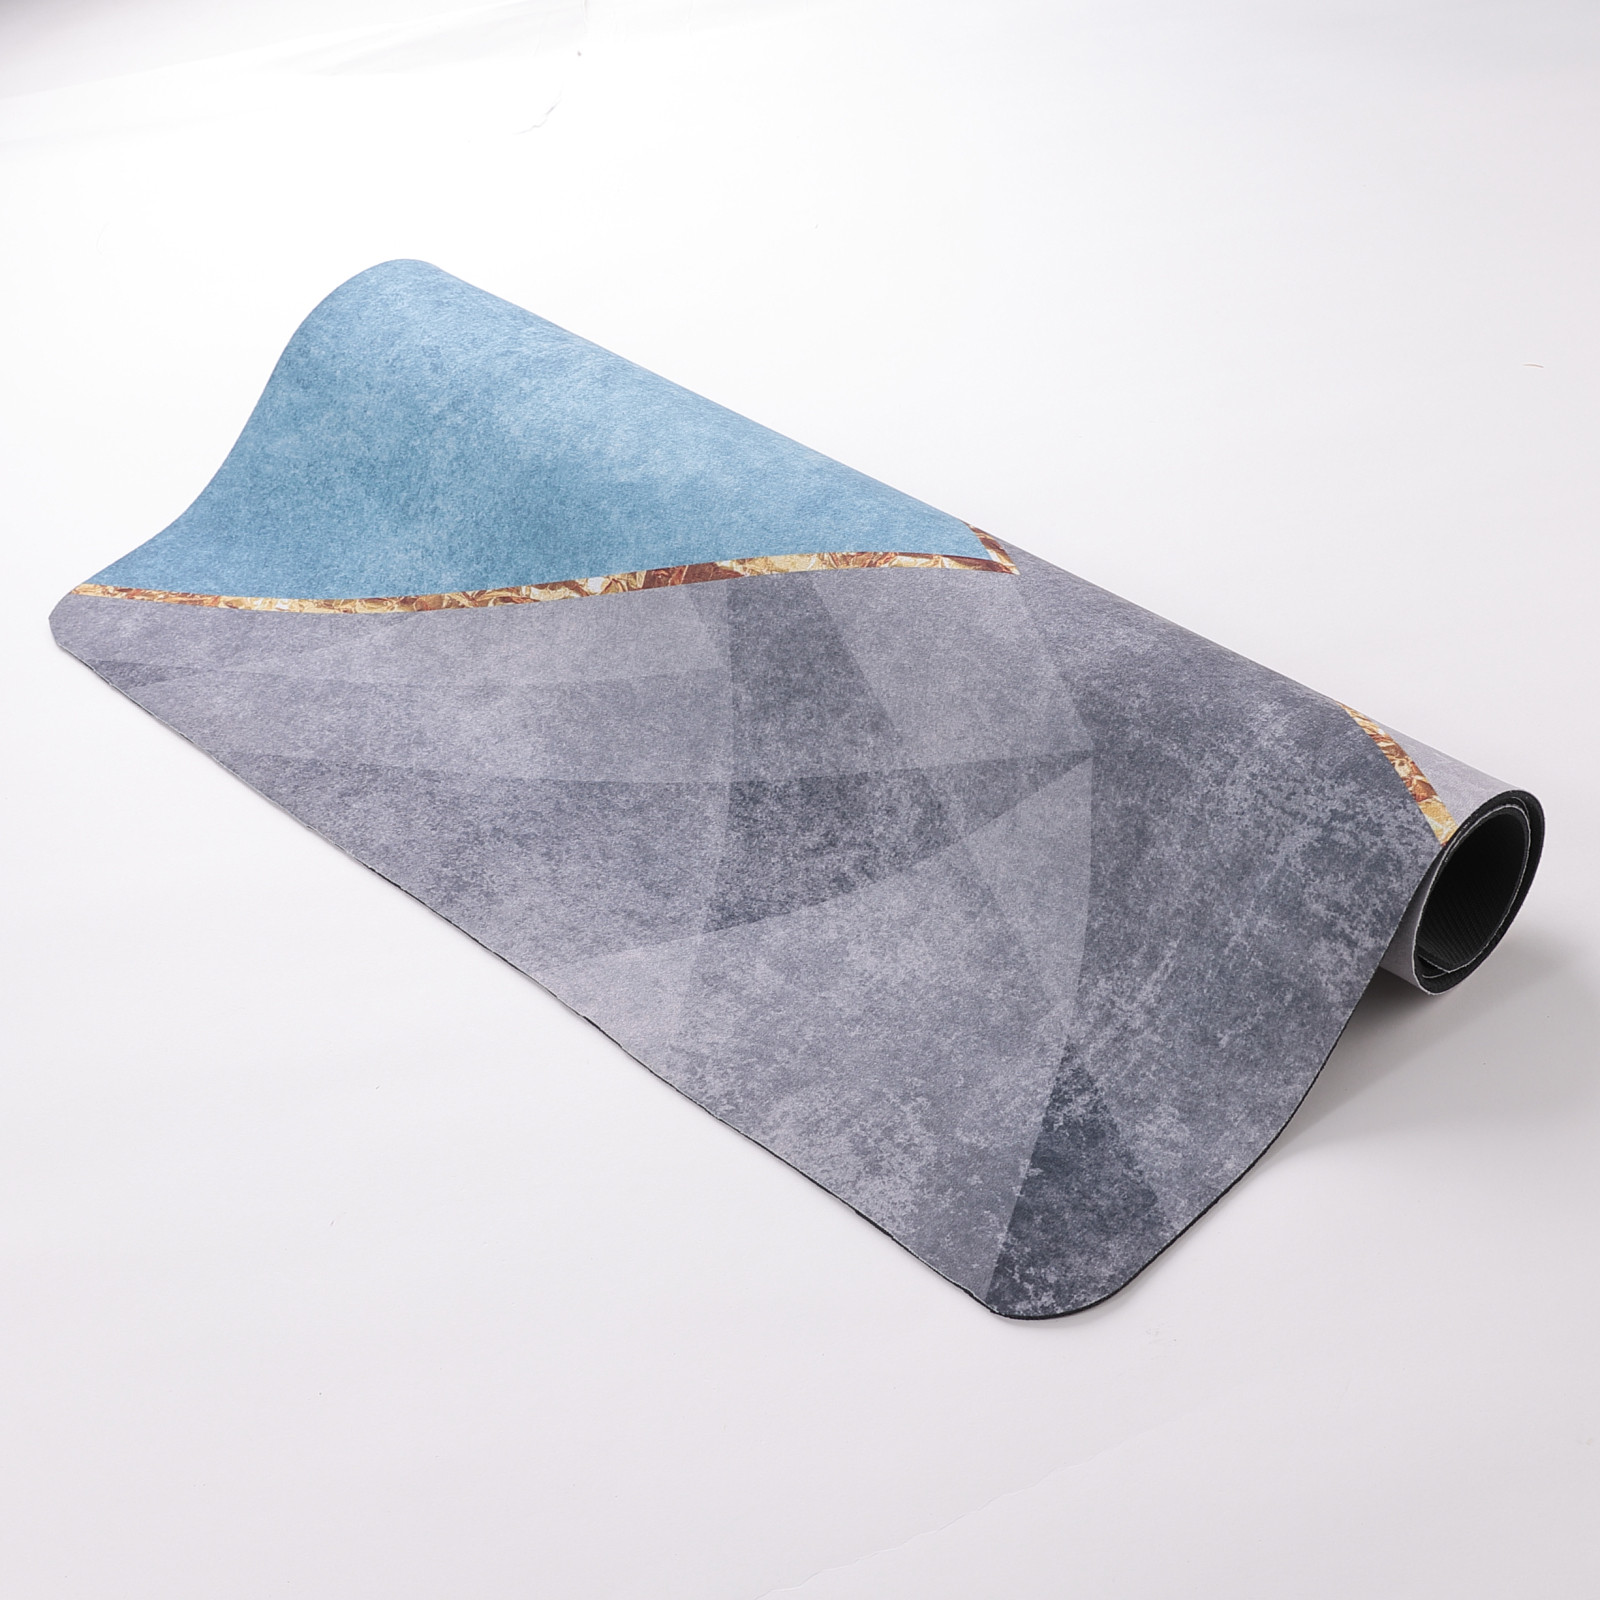 Kuber Industries Anti Skid Bathroom Mat|Rubber Floor Mat for Home|Idol for Bathroom, Kitchen, Bedroom (Multi)